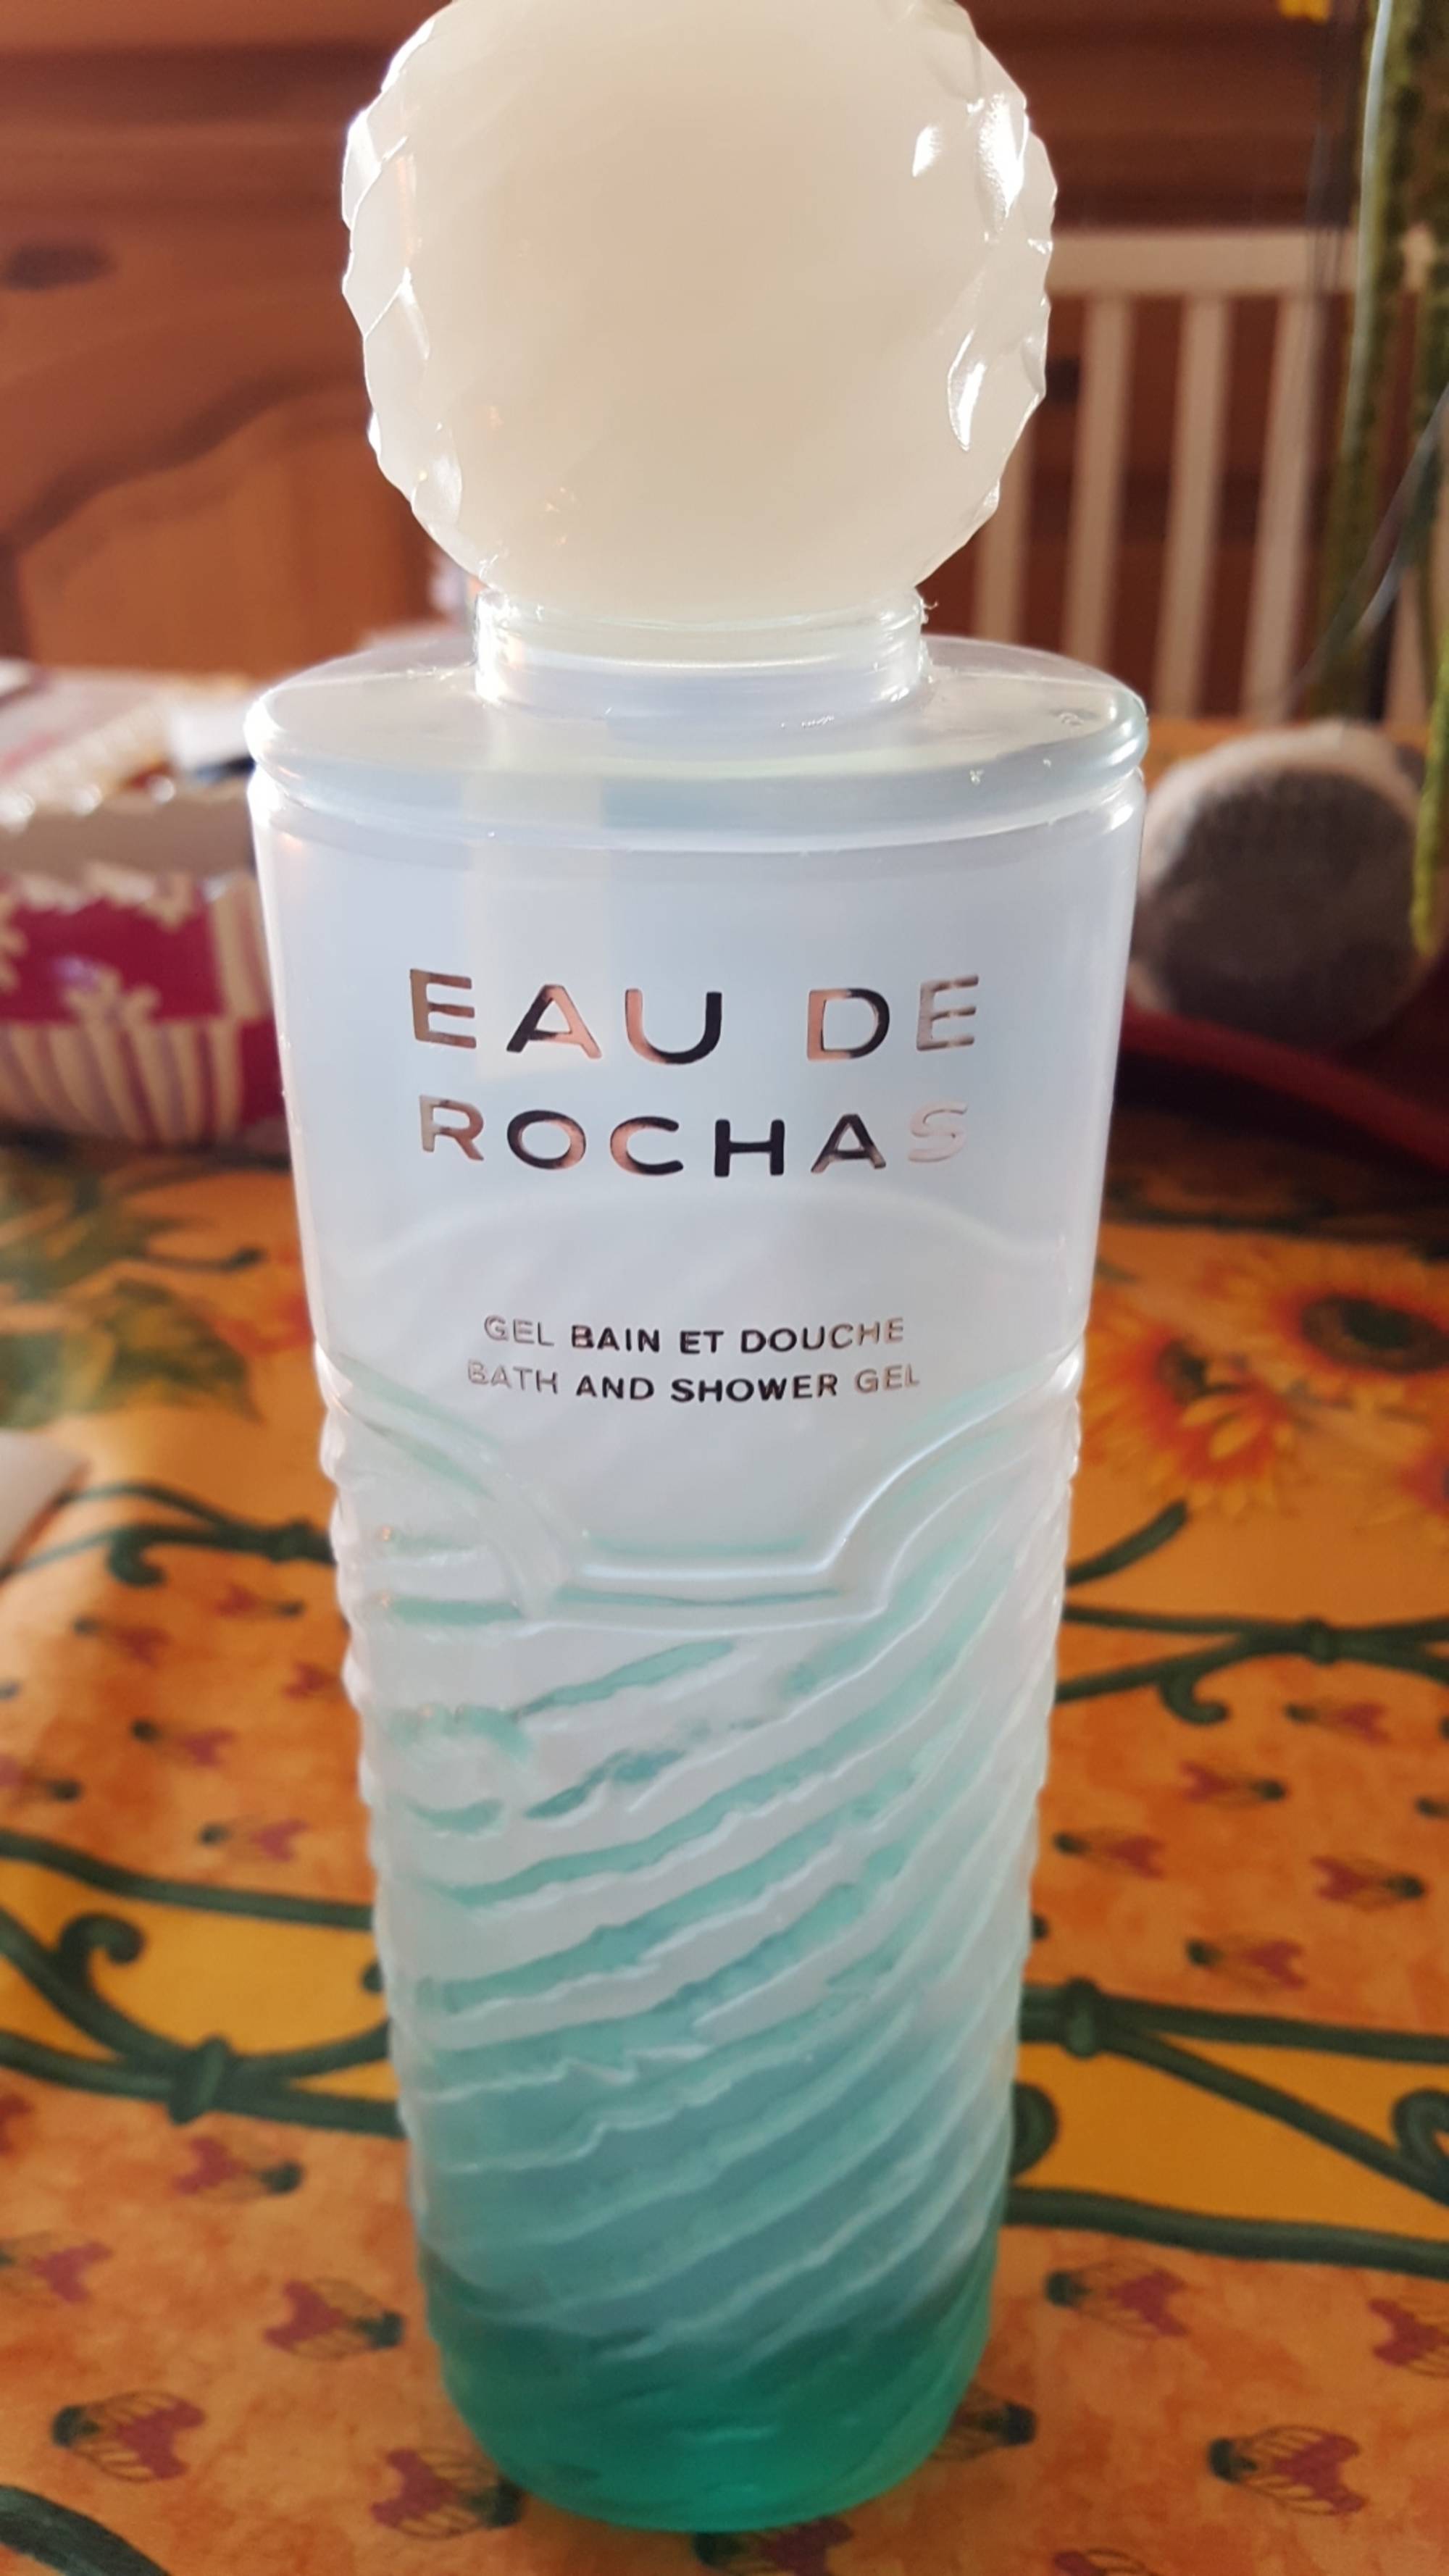 ROCHAS - Eau de Rochas - Gel bain et douche